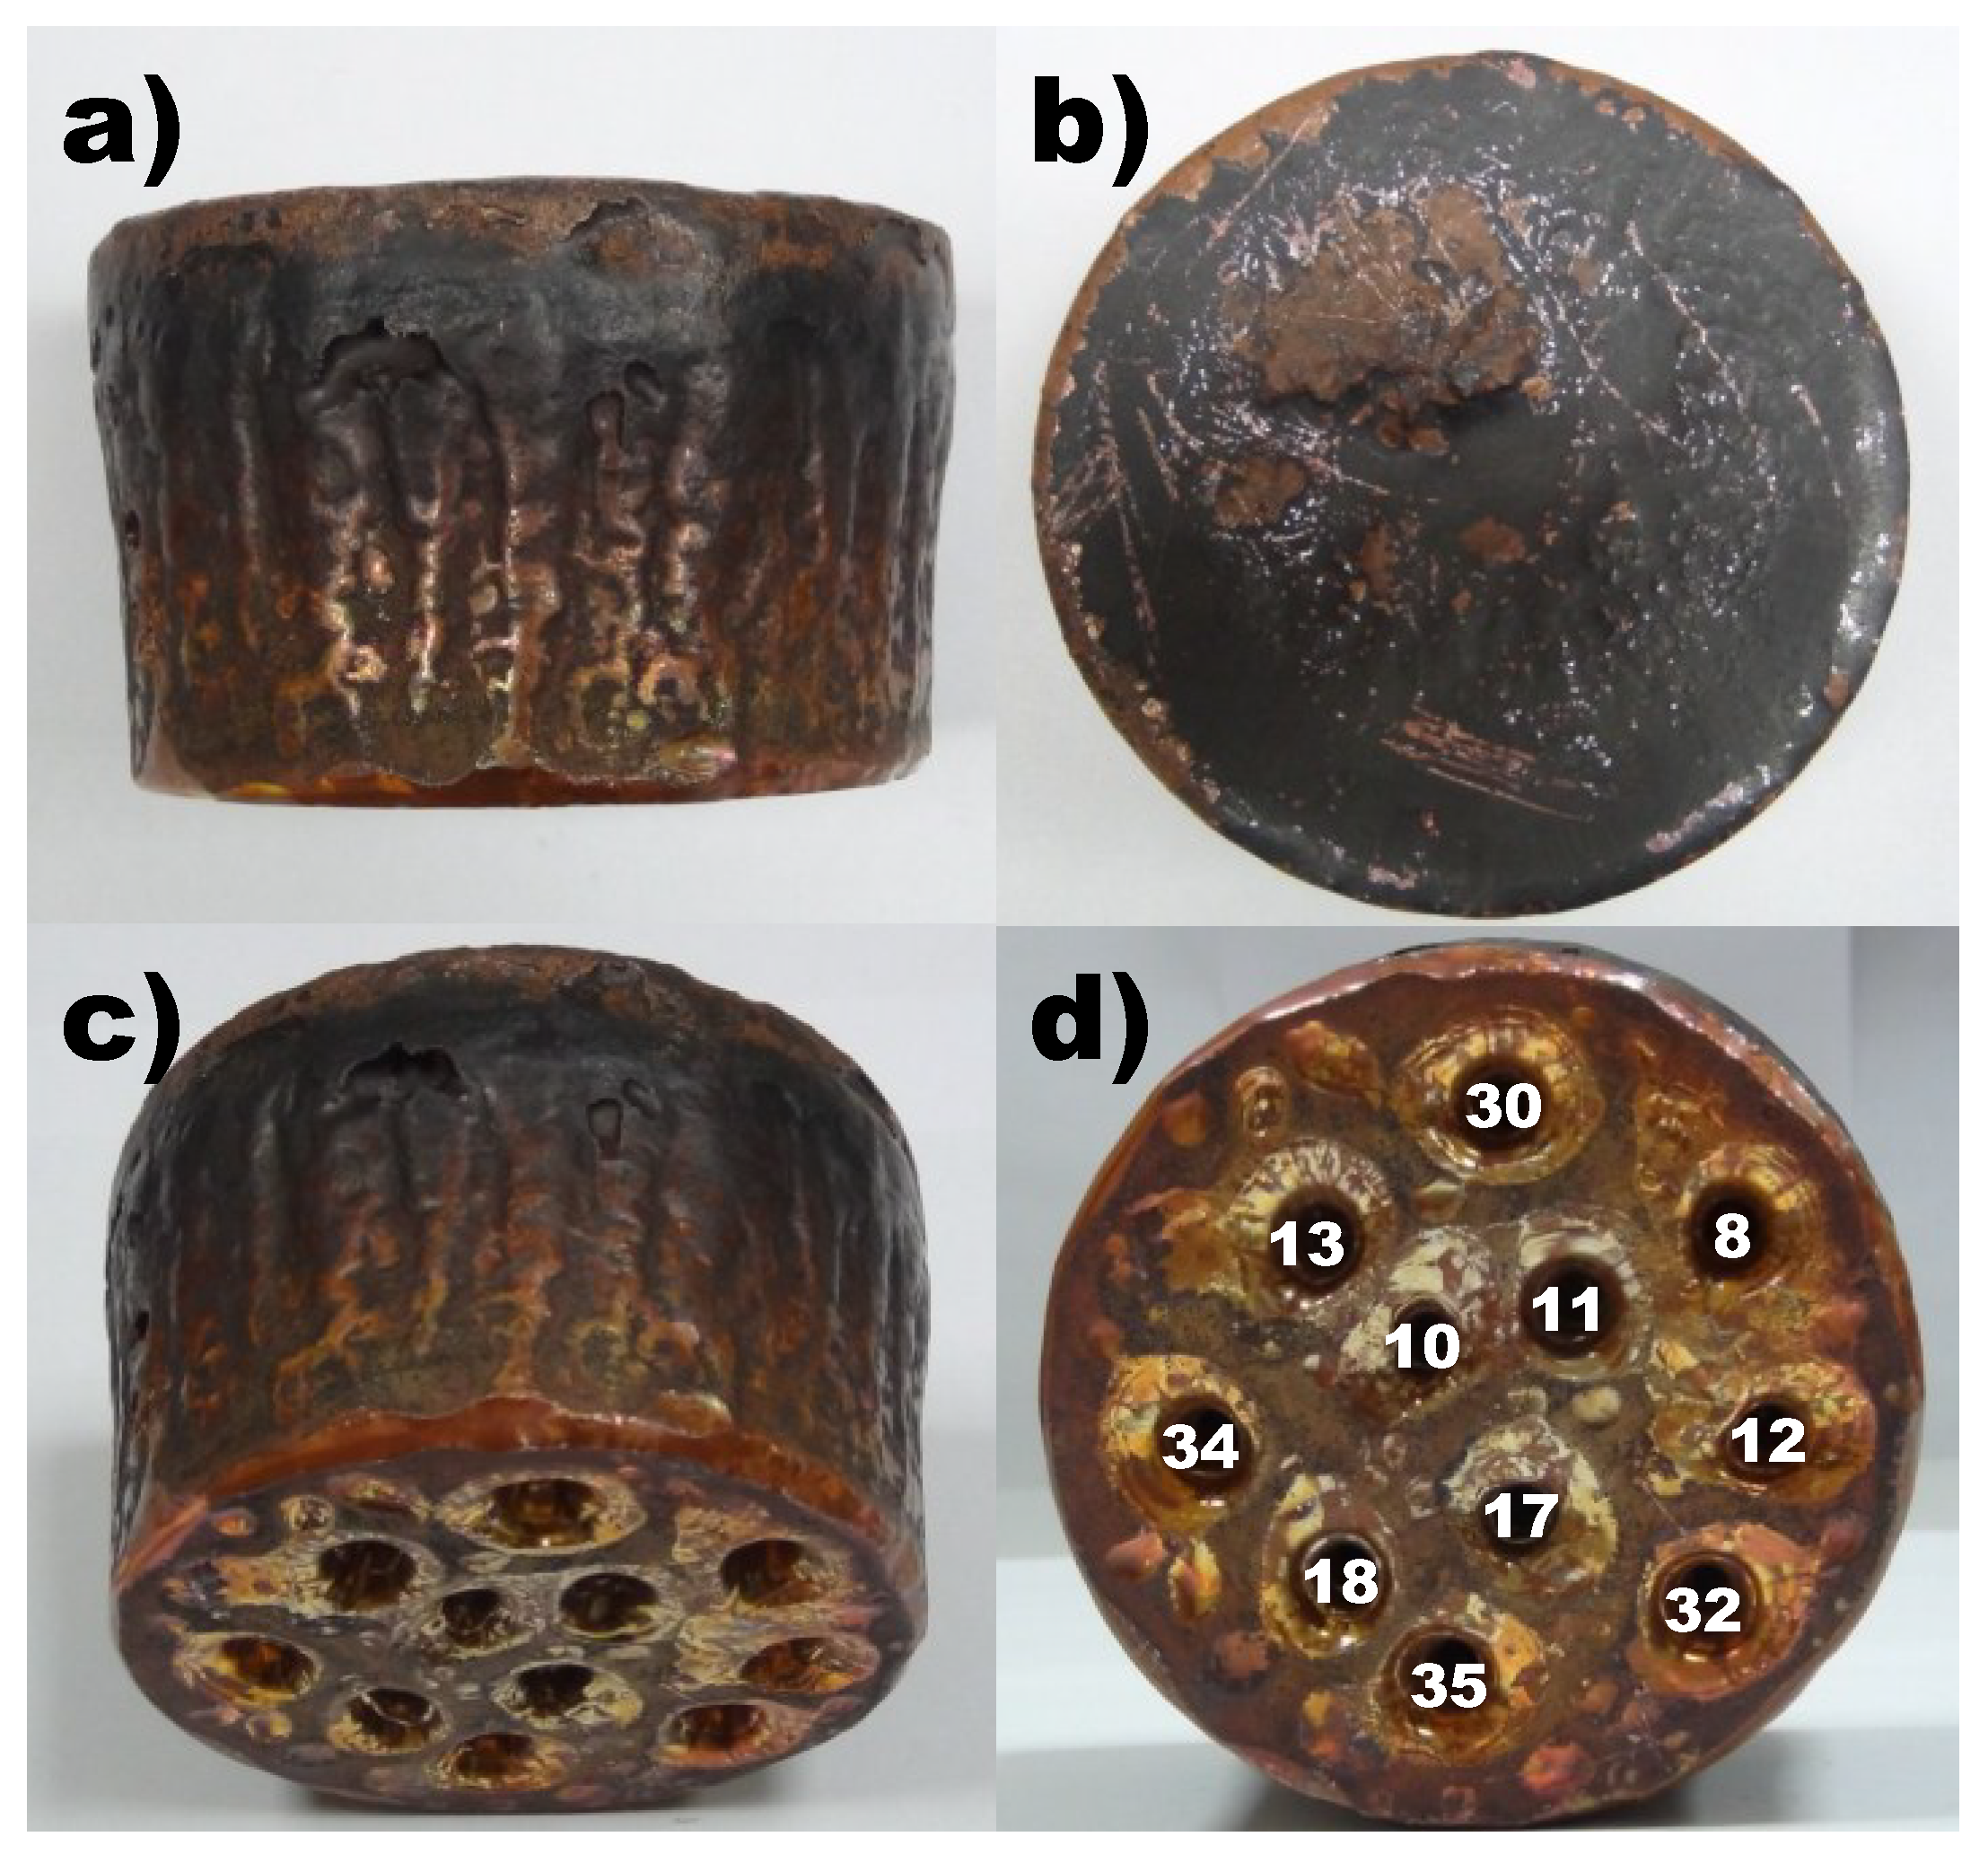 a shows a copper ingot prepared by melting grade a copper plate in